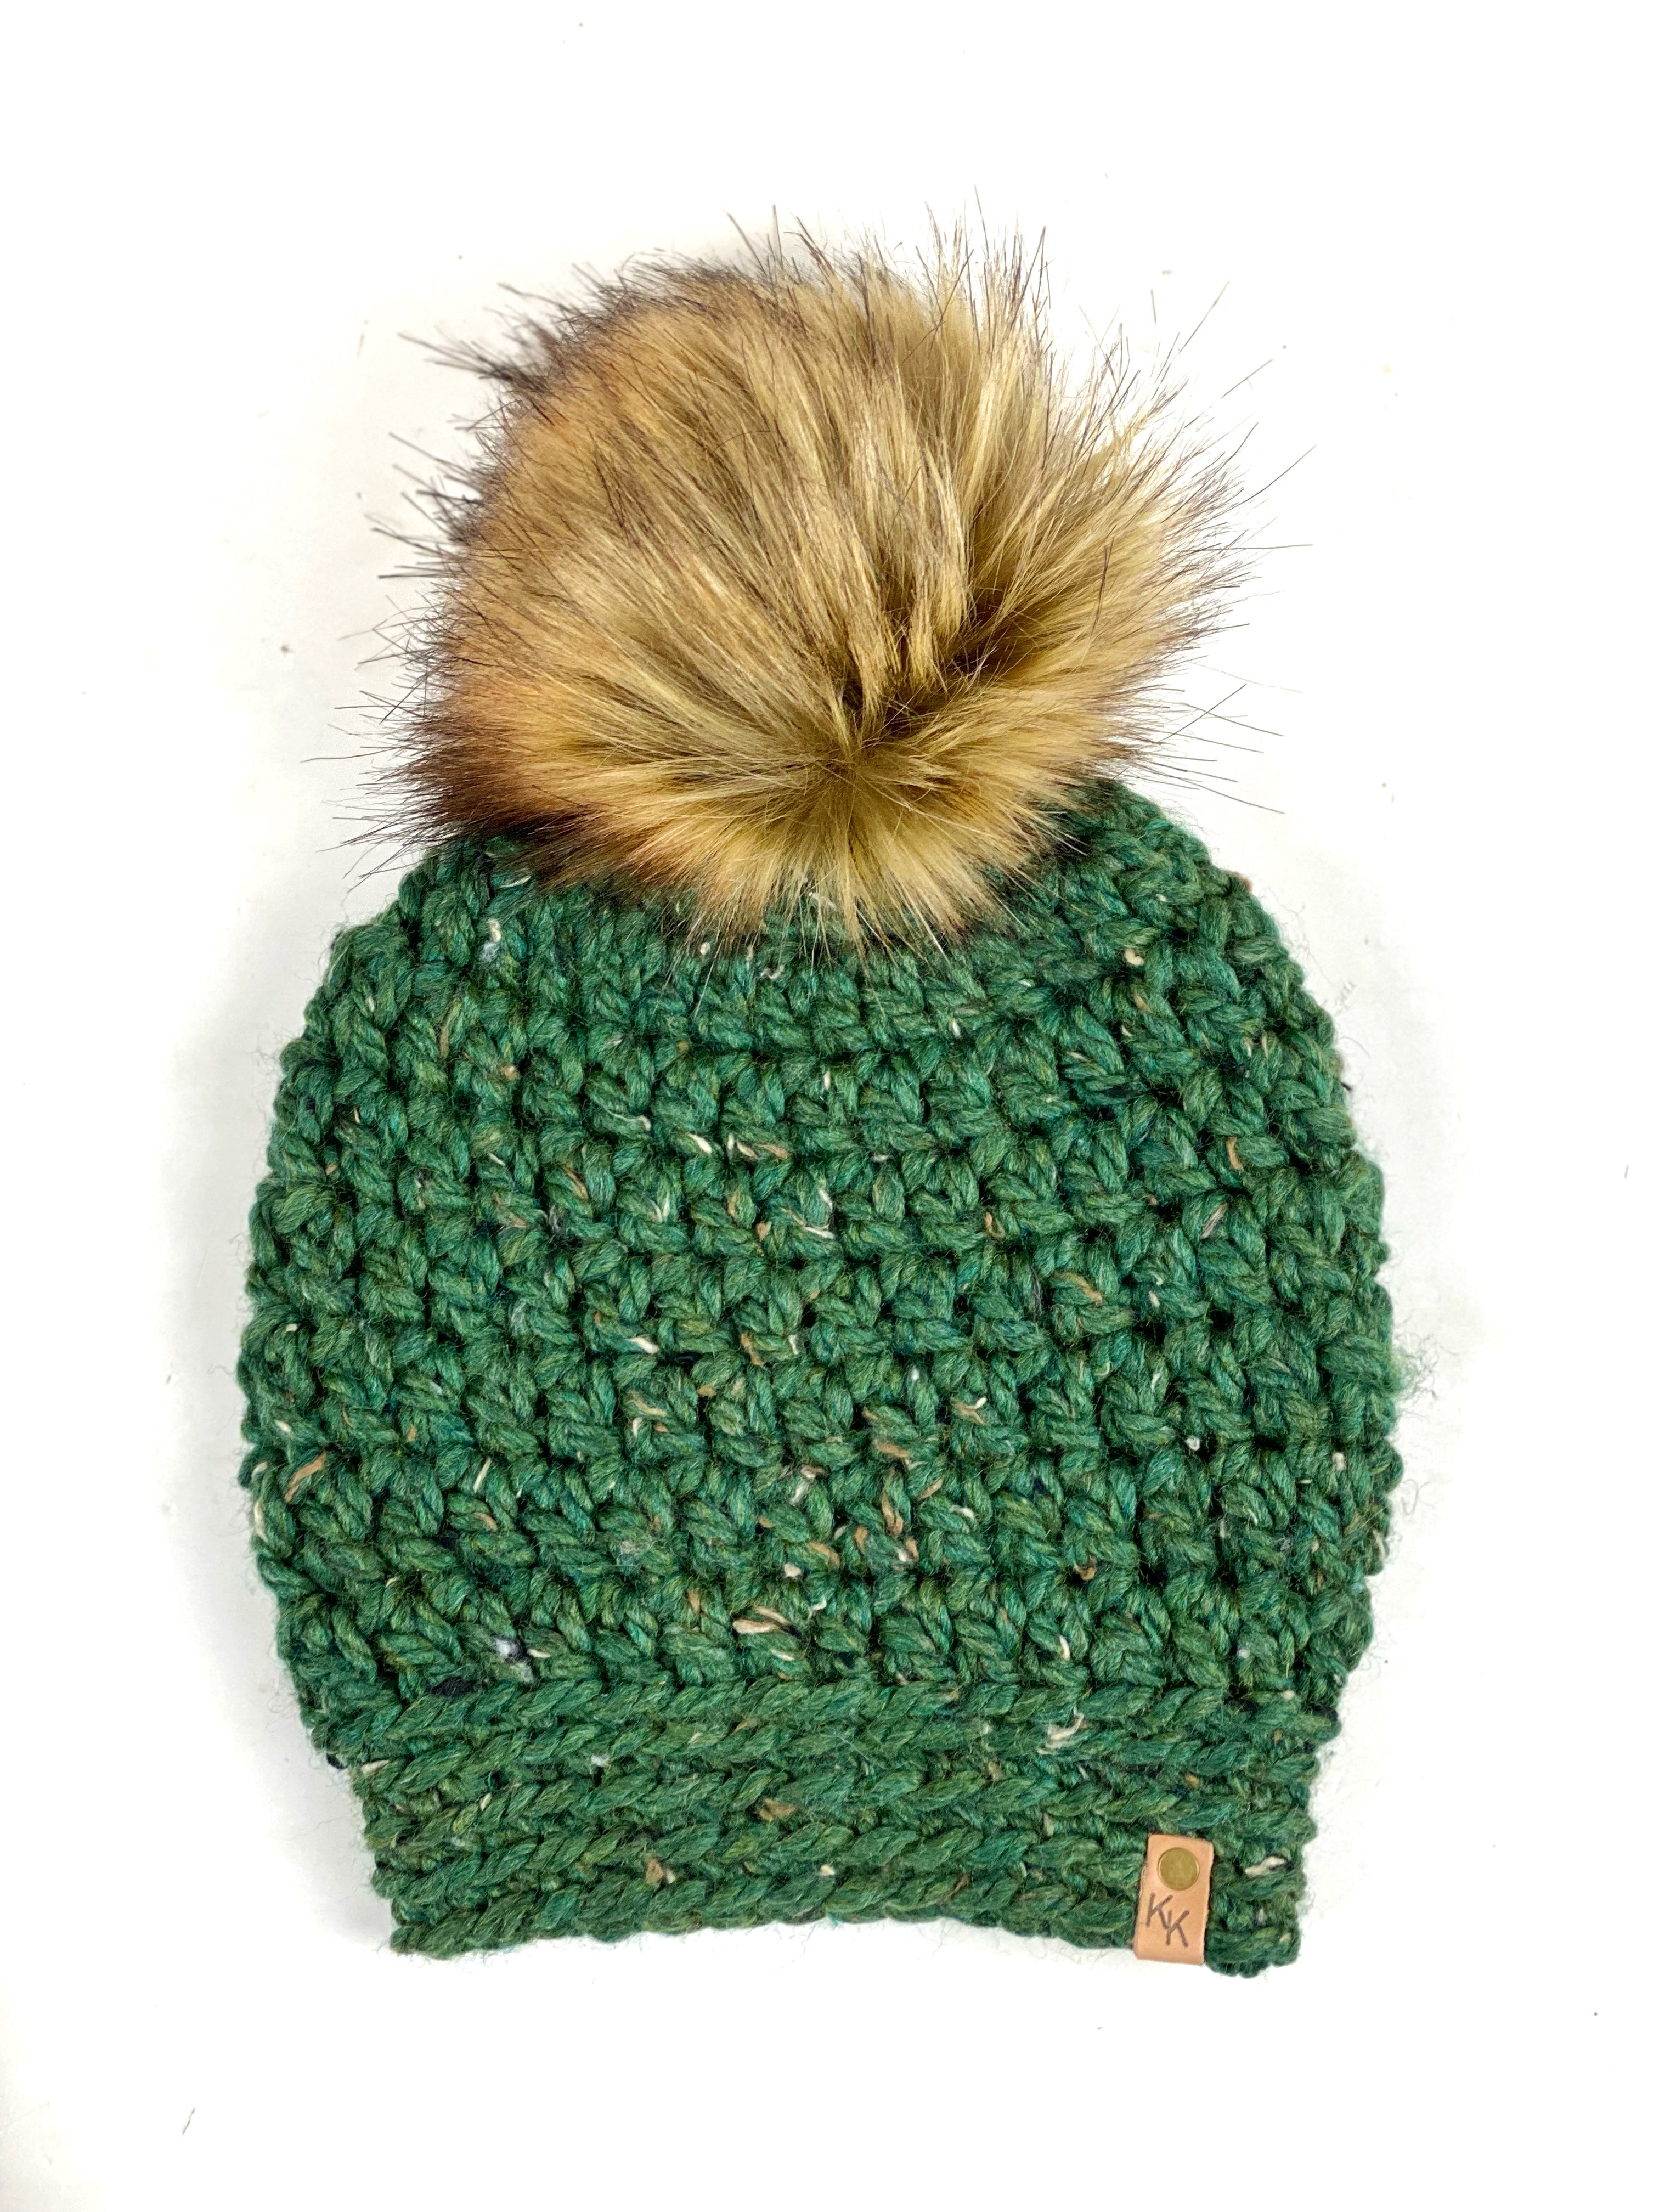 Slightly Slouchy Pom Beanie, Womens Crochet Hat, Handmade Crochet Beanie